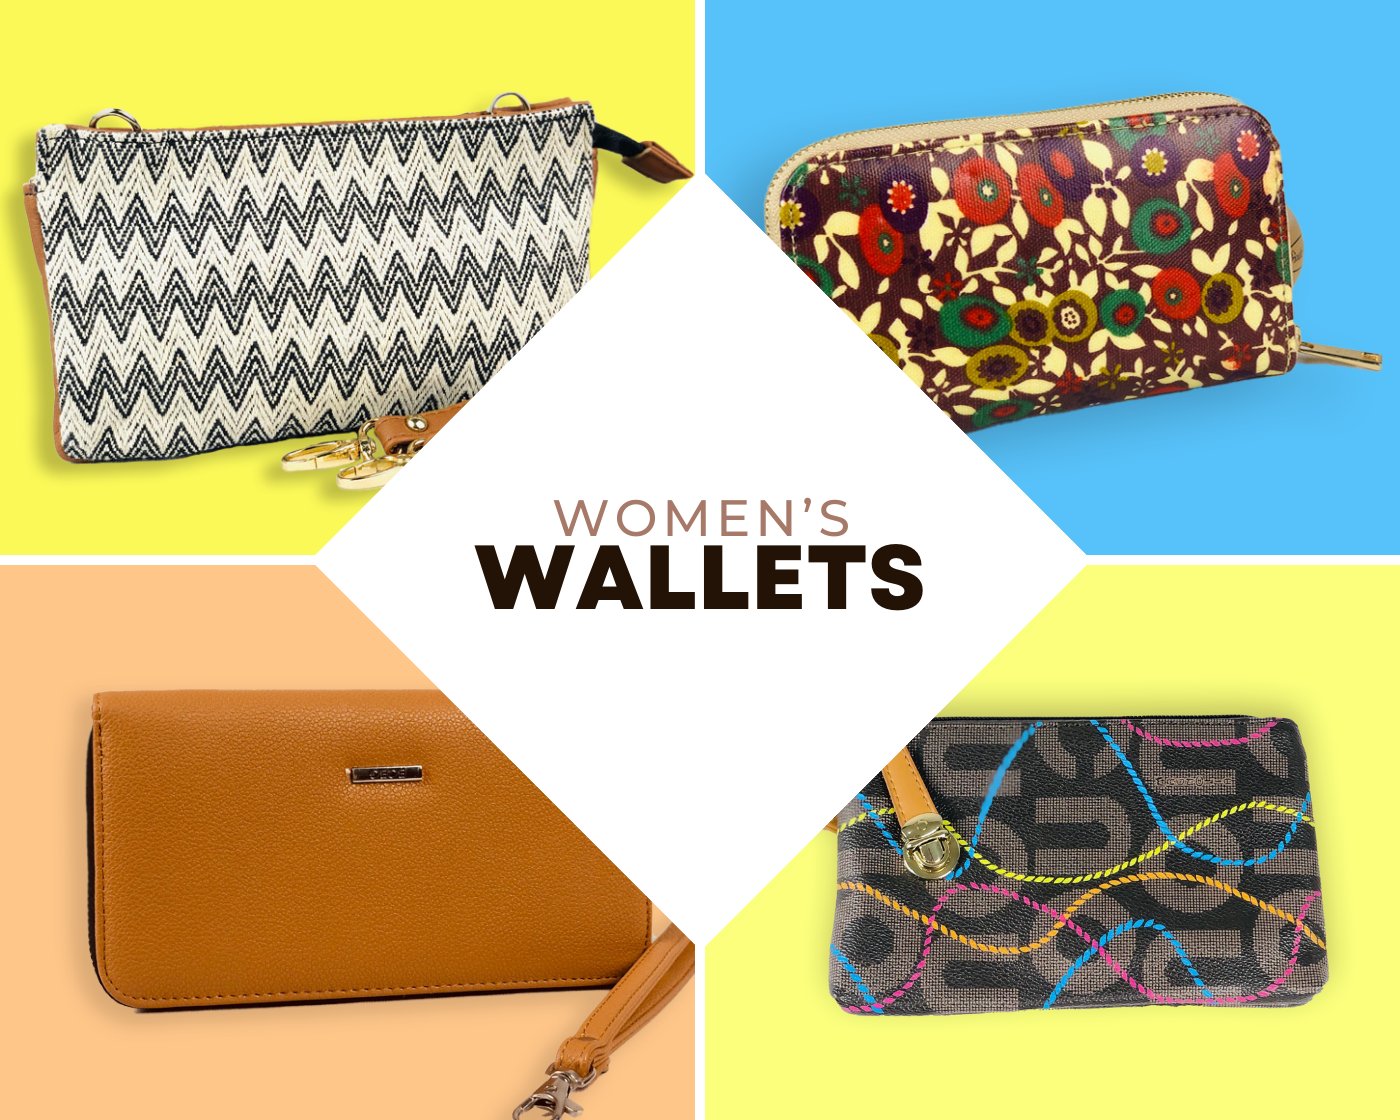 Handbags, lady bags, women bags, ladies wallets, women wallets, mini wallets, clutches, Fashionable, trendy